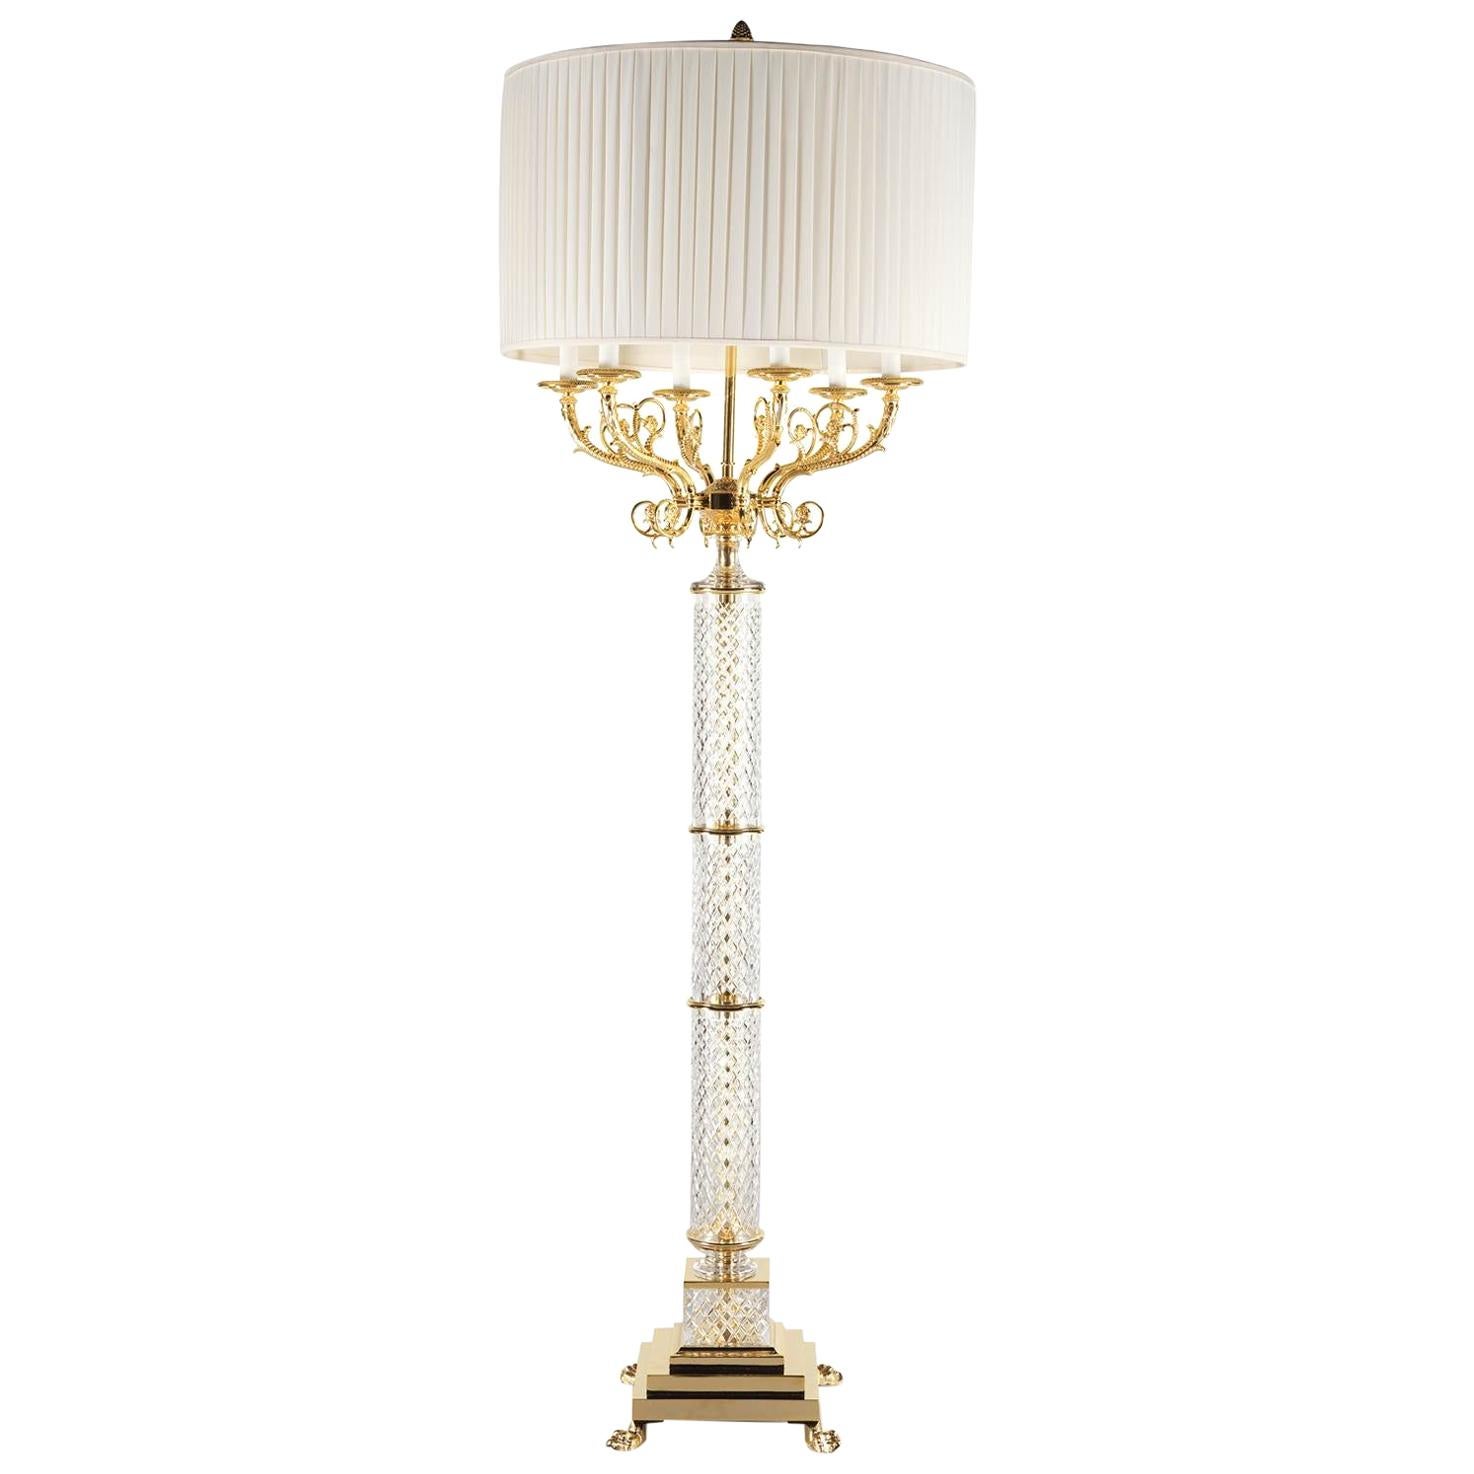 L034/F Italian Floor Lamp in Crystal and Finishing Gold 24-Karat by Zanaboni